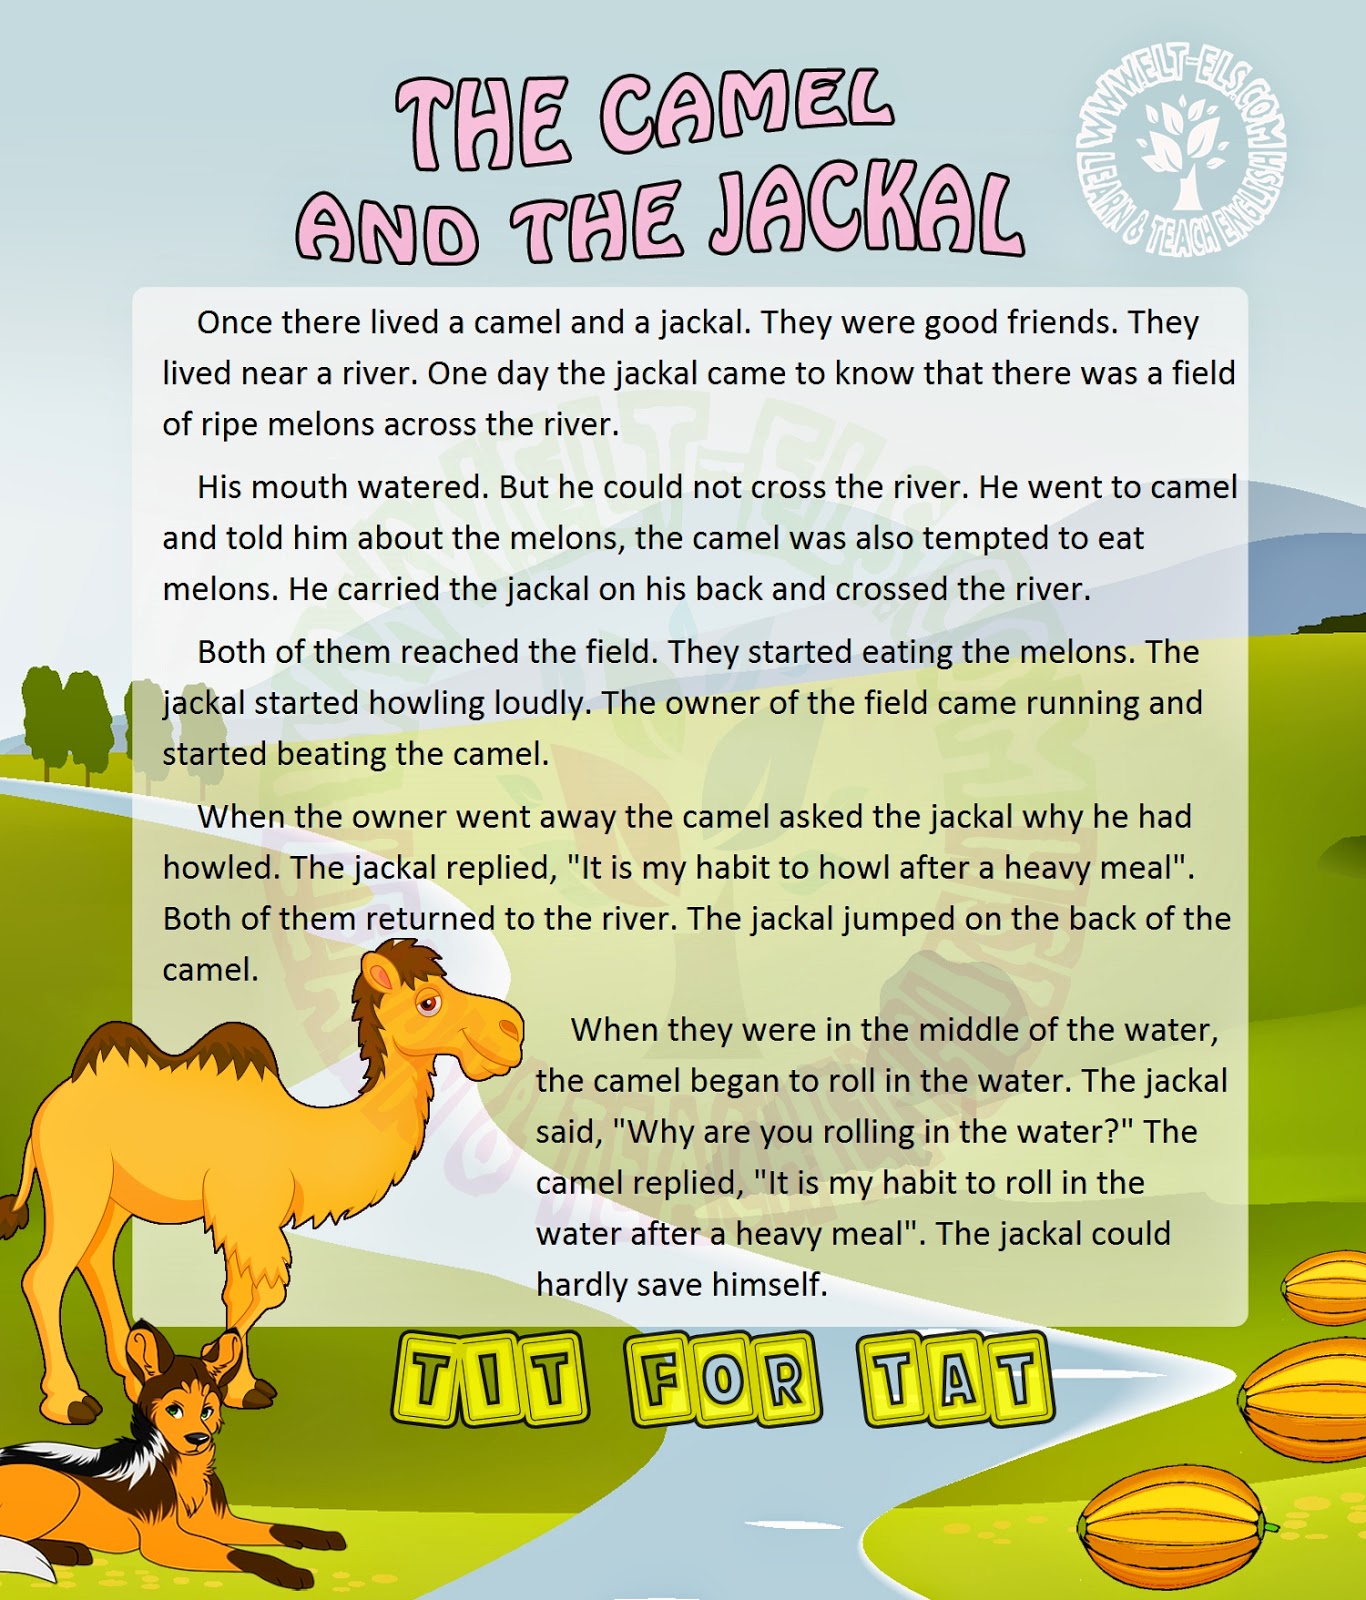 The camel and the jackal | www.elt-els.com